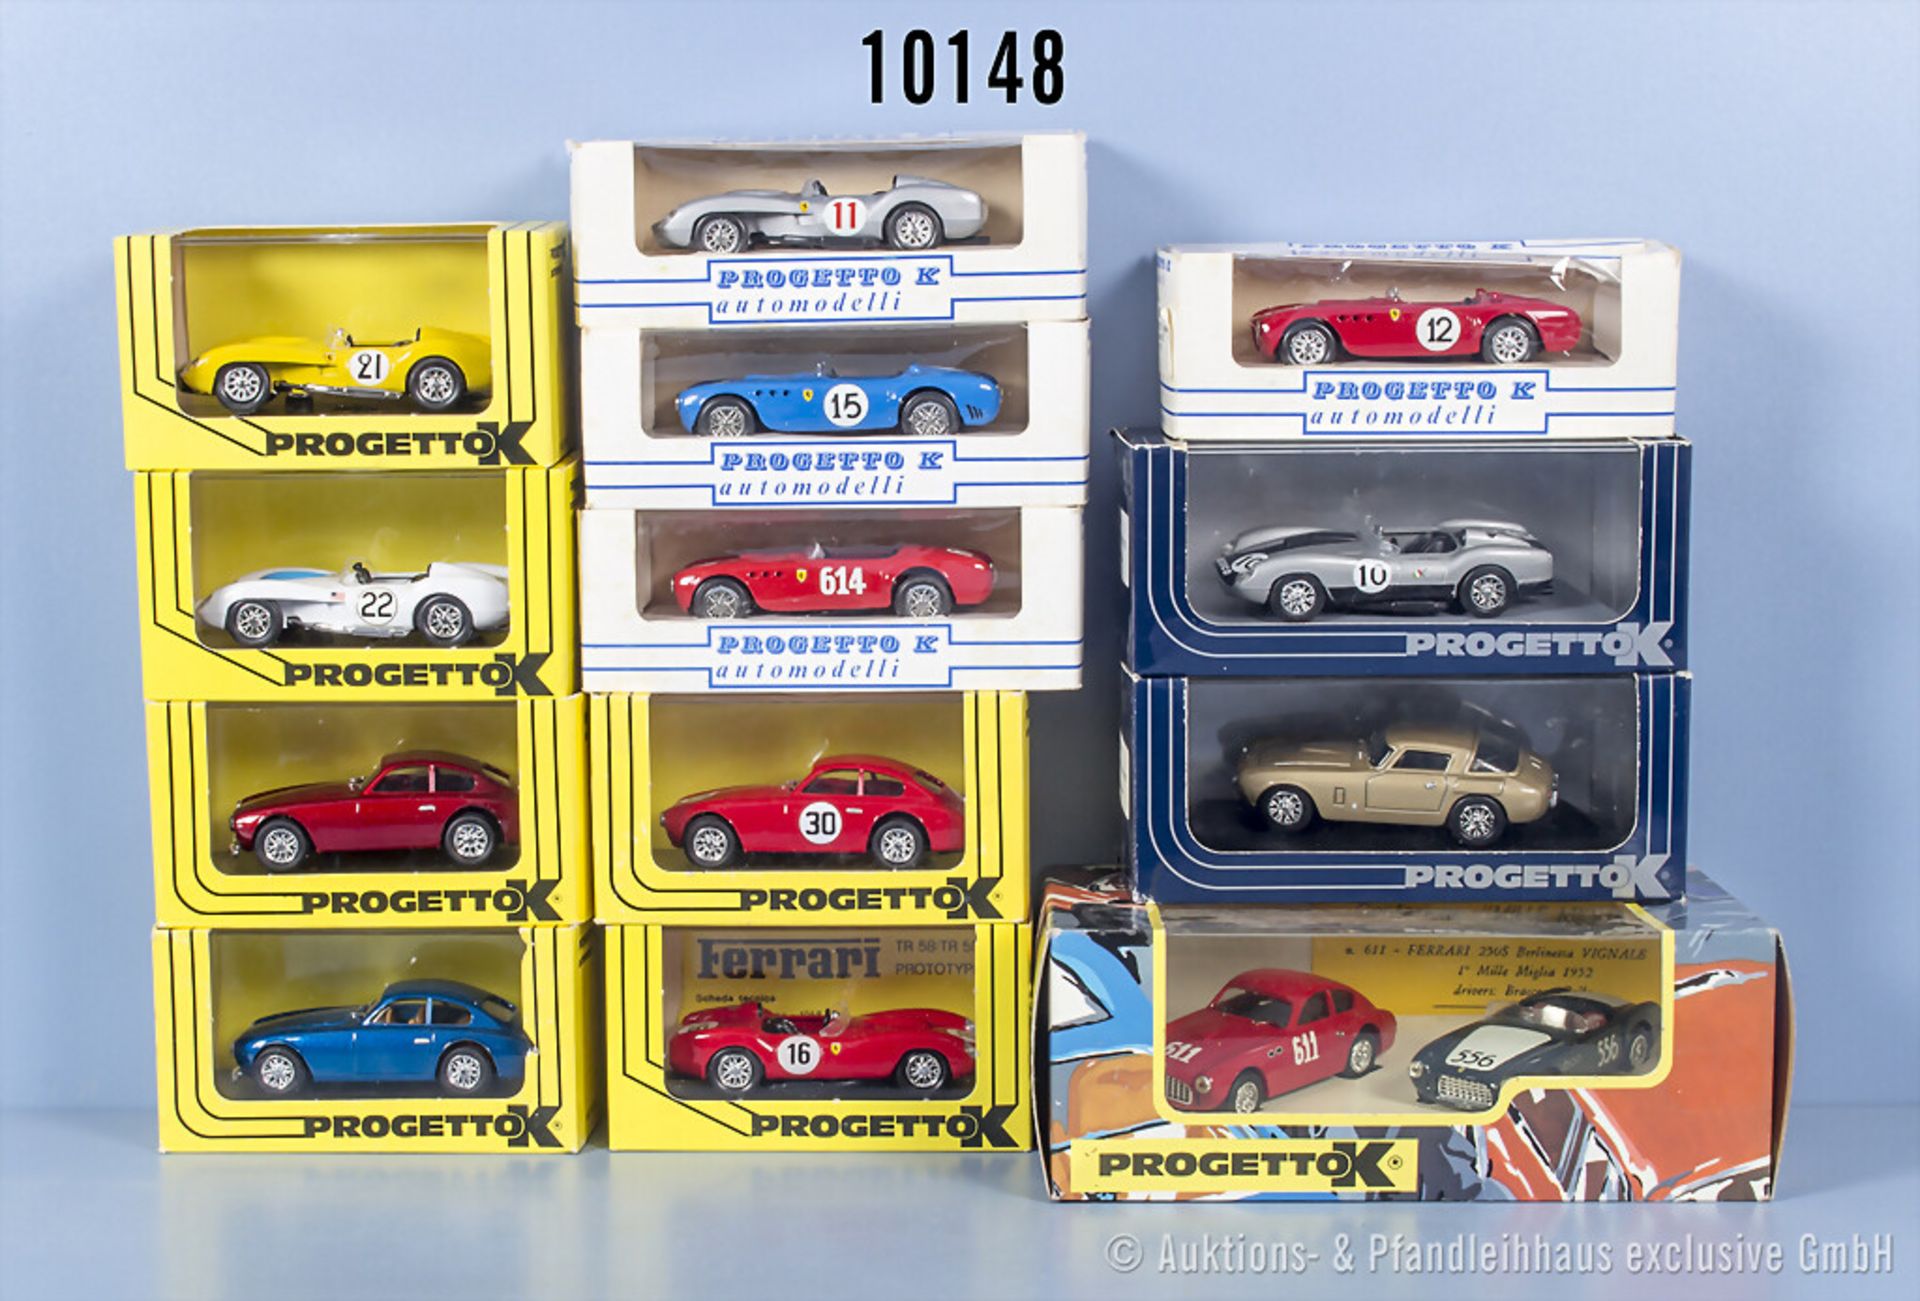 14 Progetto K Modellfahrzeuge, Ferrari Modelle, Metall, 1:43, Z 0, ...